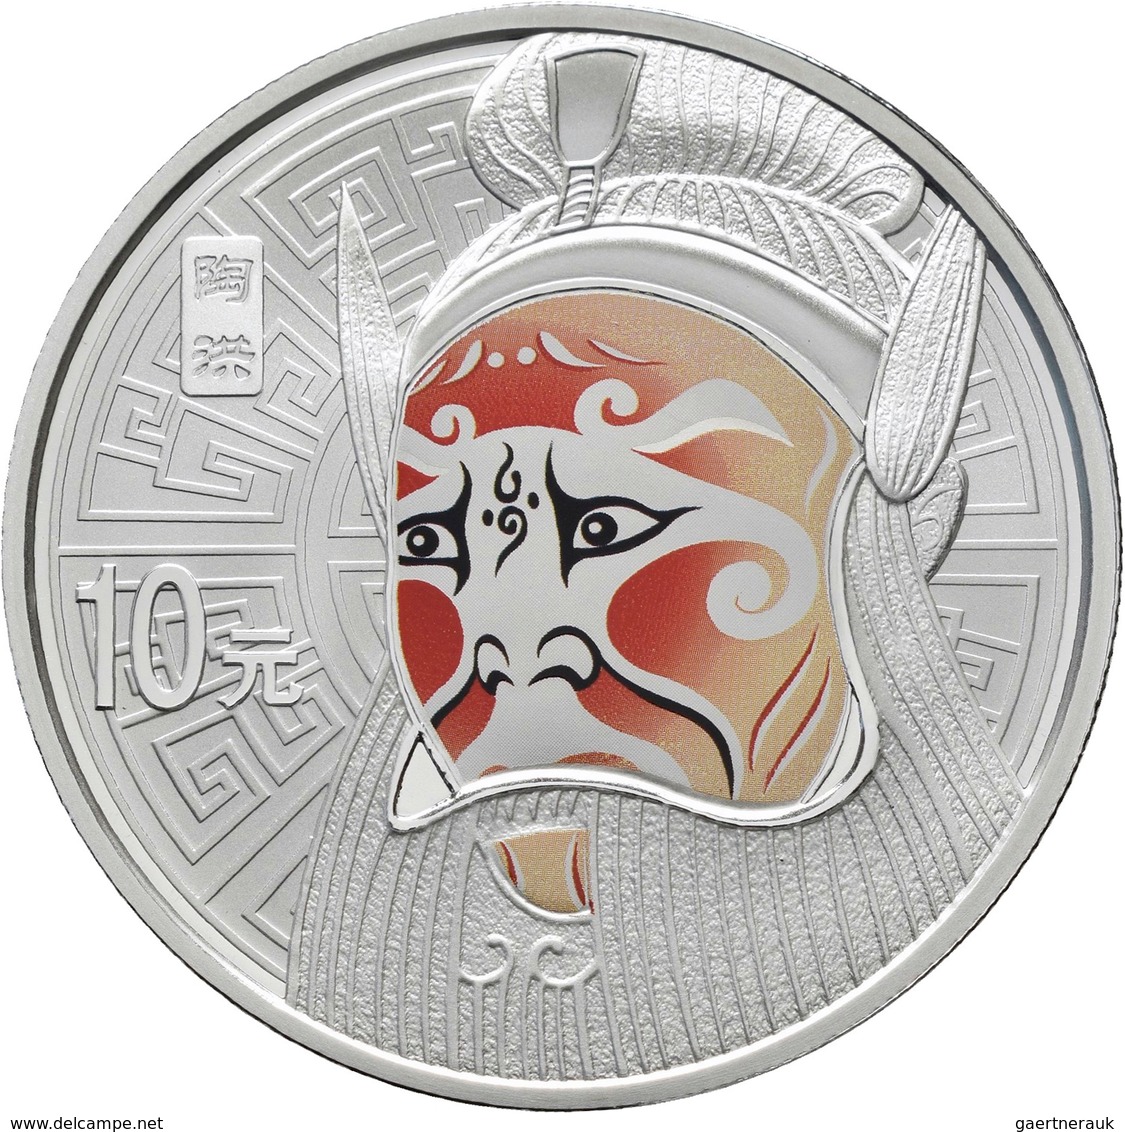 China - Volksrepublik: Peking Opera Facial Mask III. Serie: 50 Yuan 2012, 5 OZ 999/1000 Silber, Teil - Chine